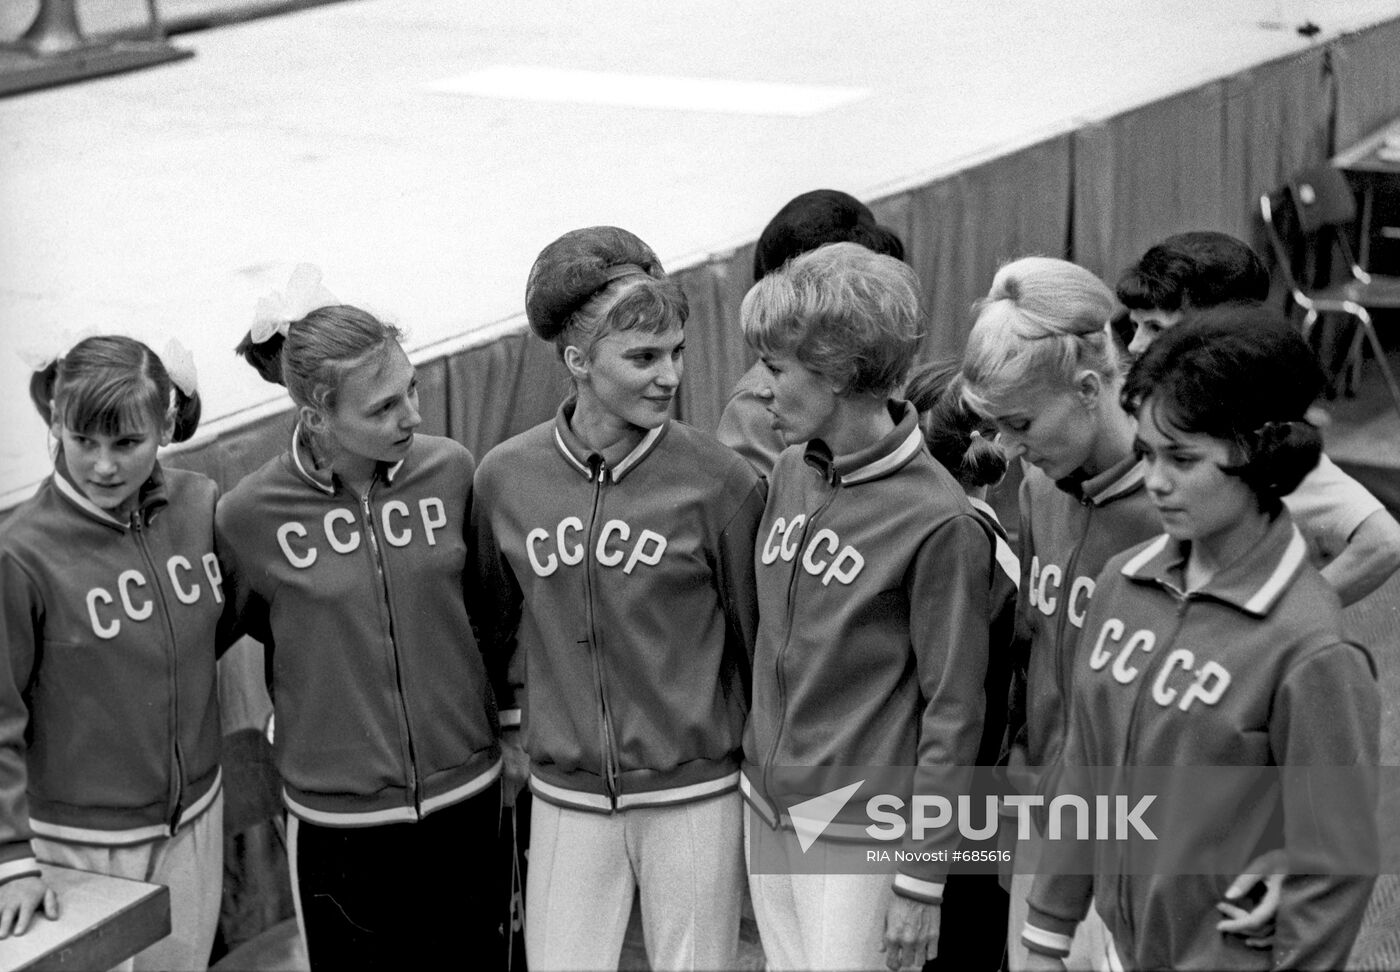 USSR national gymnastics team